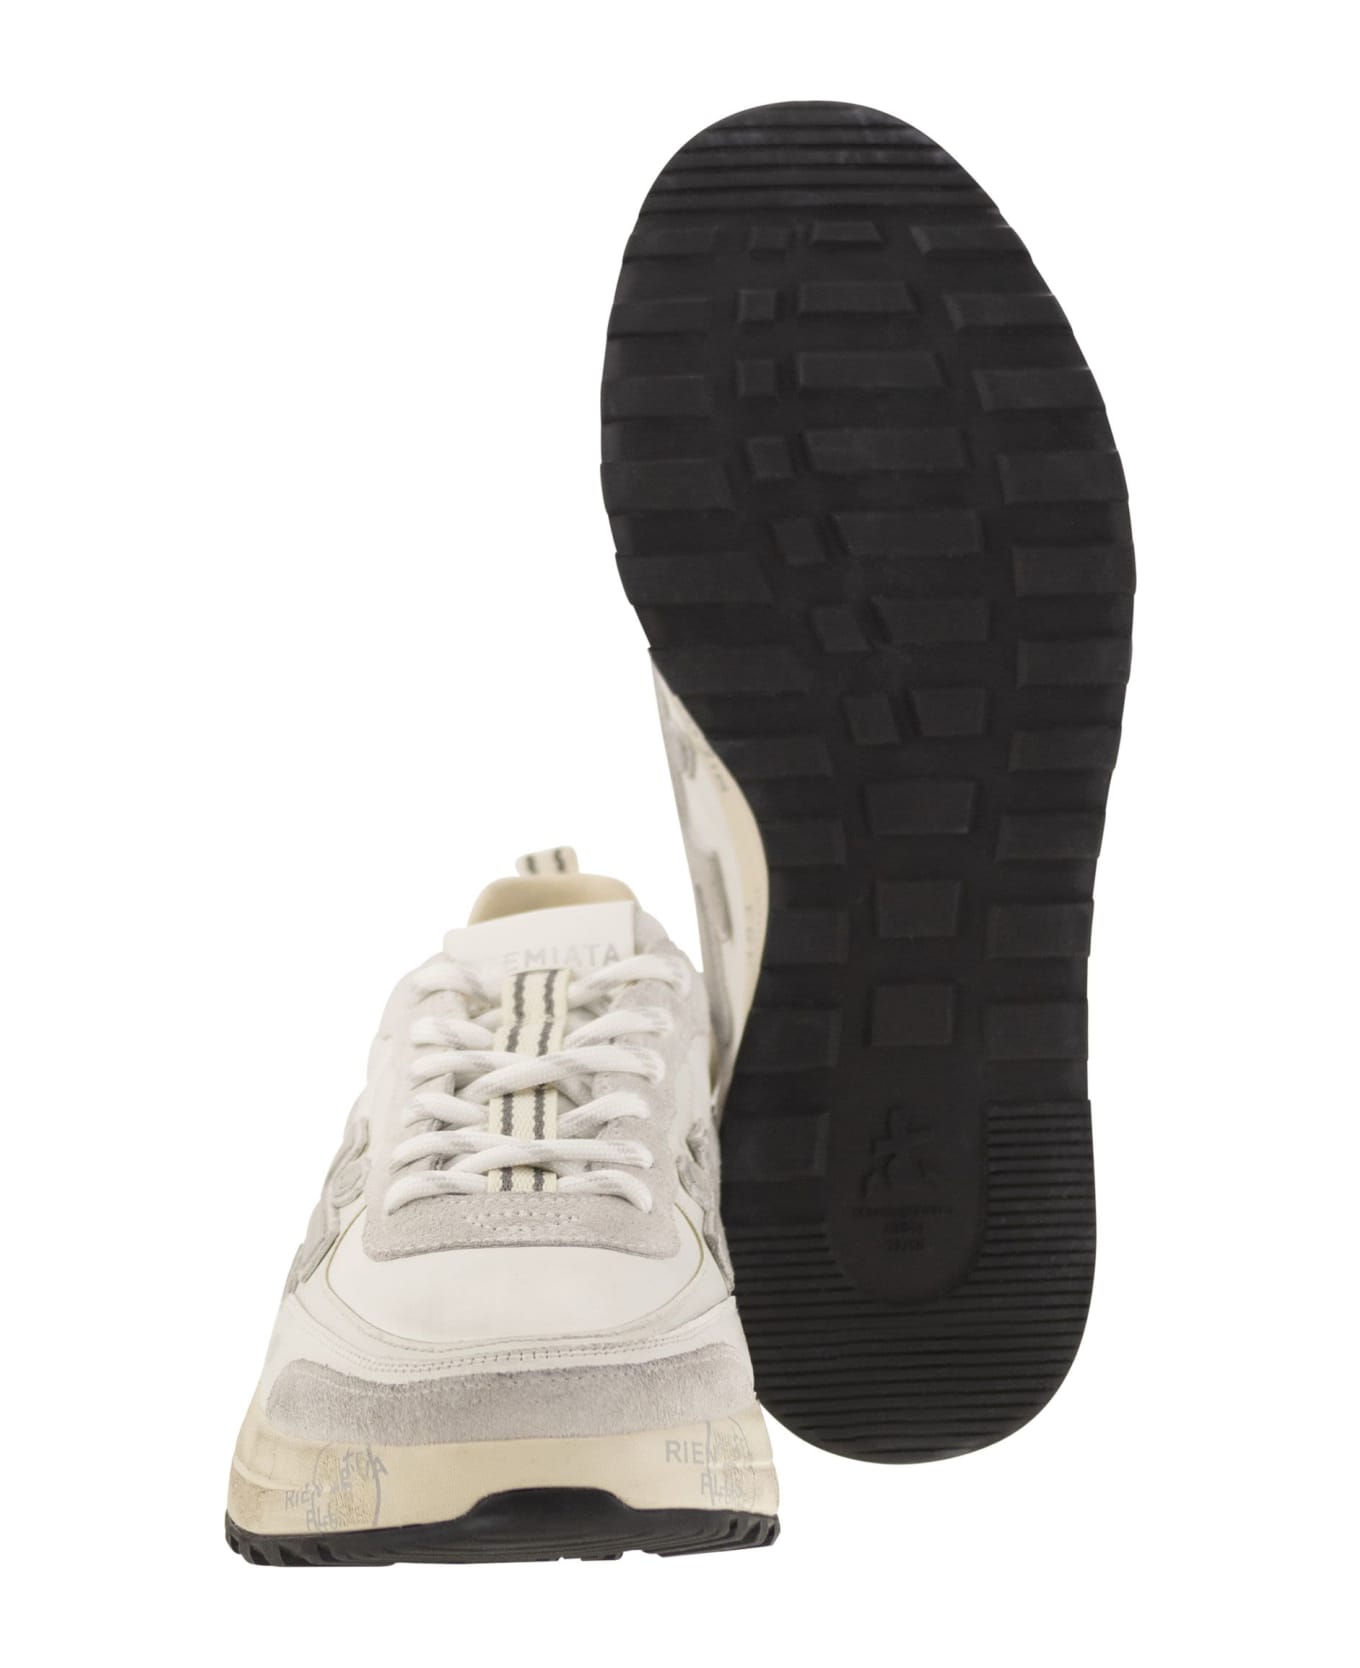 Premiata Sneakers - White/grey スニーカー